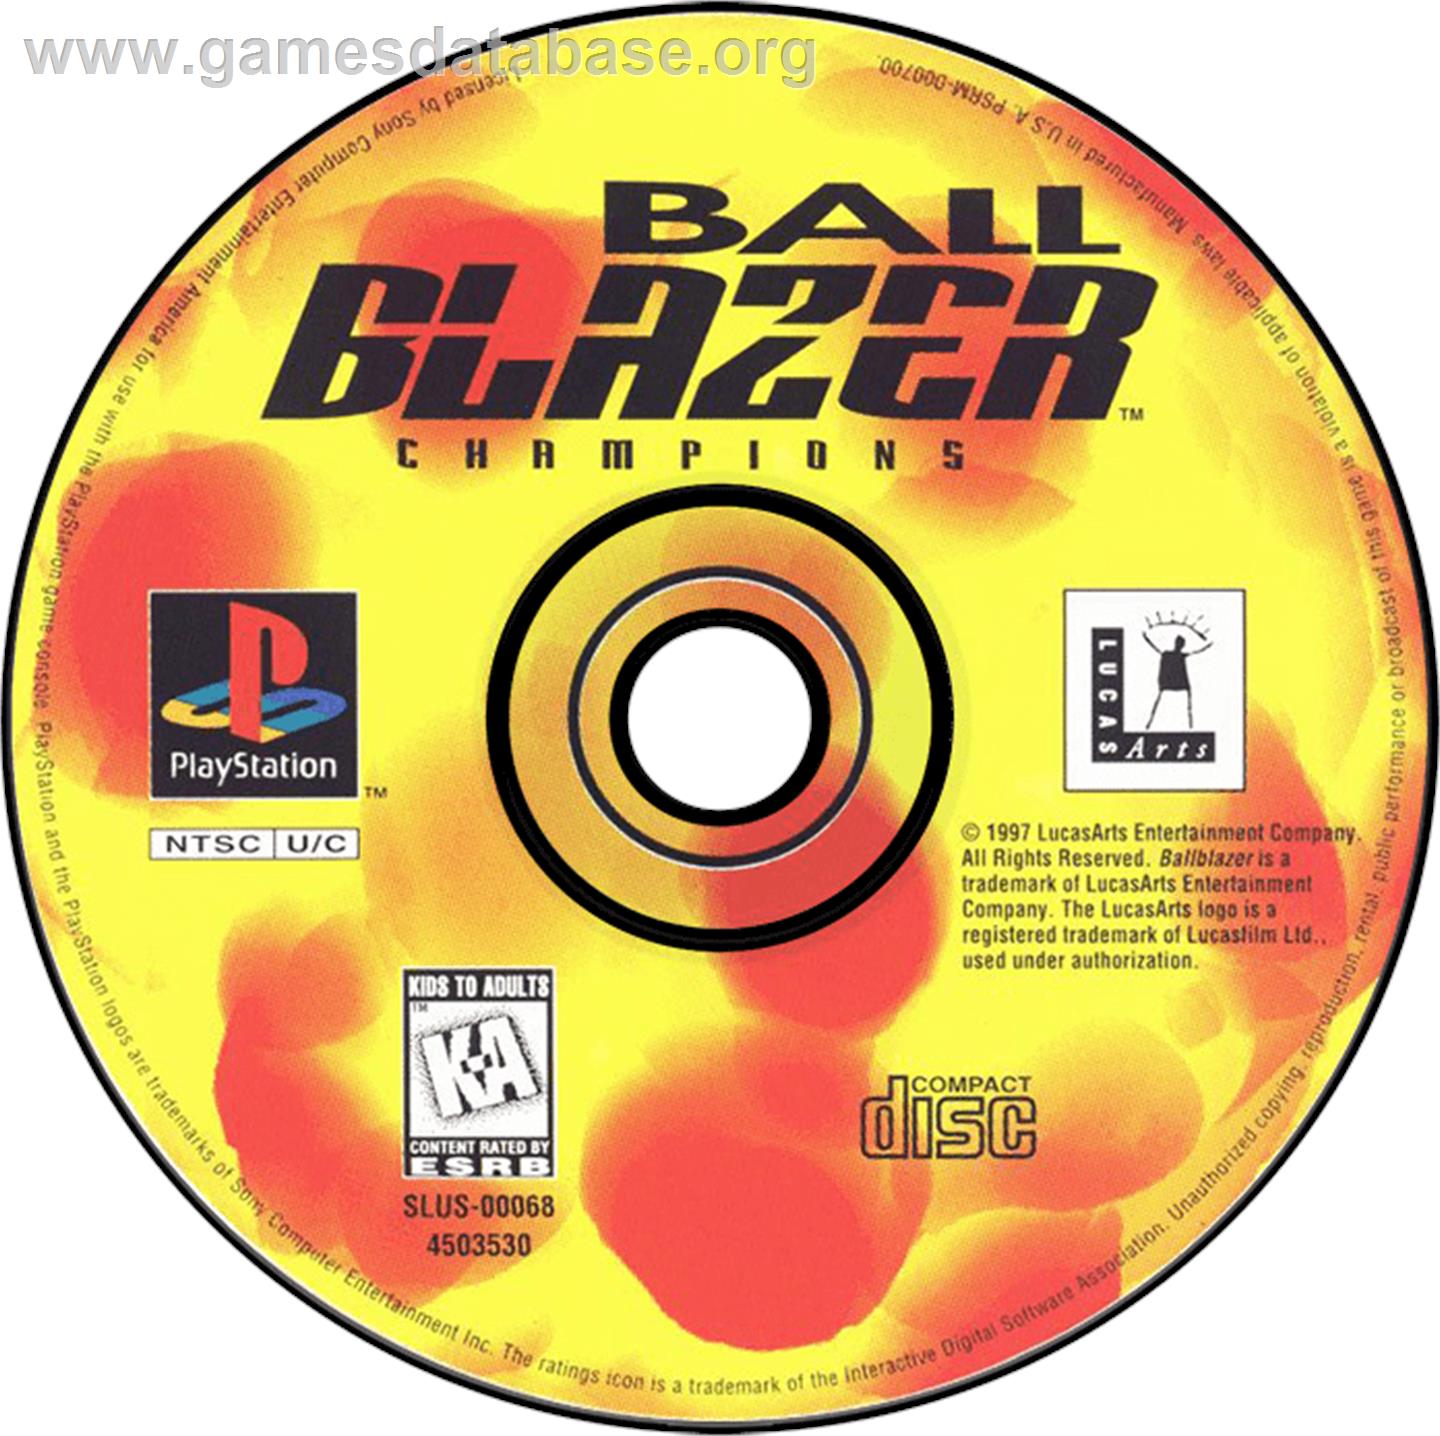 Ballblazer Champions - Sony Playstation - Artwork - Disc